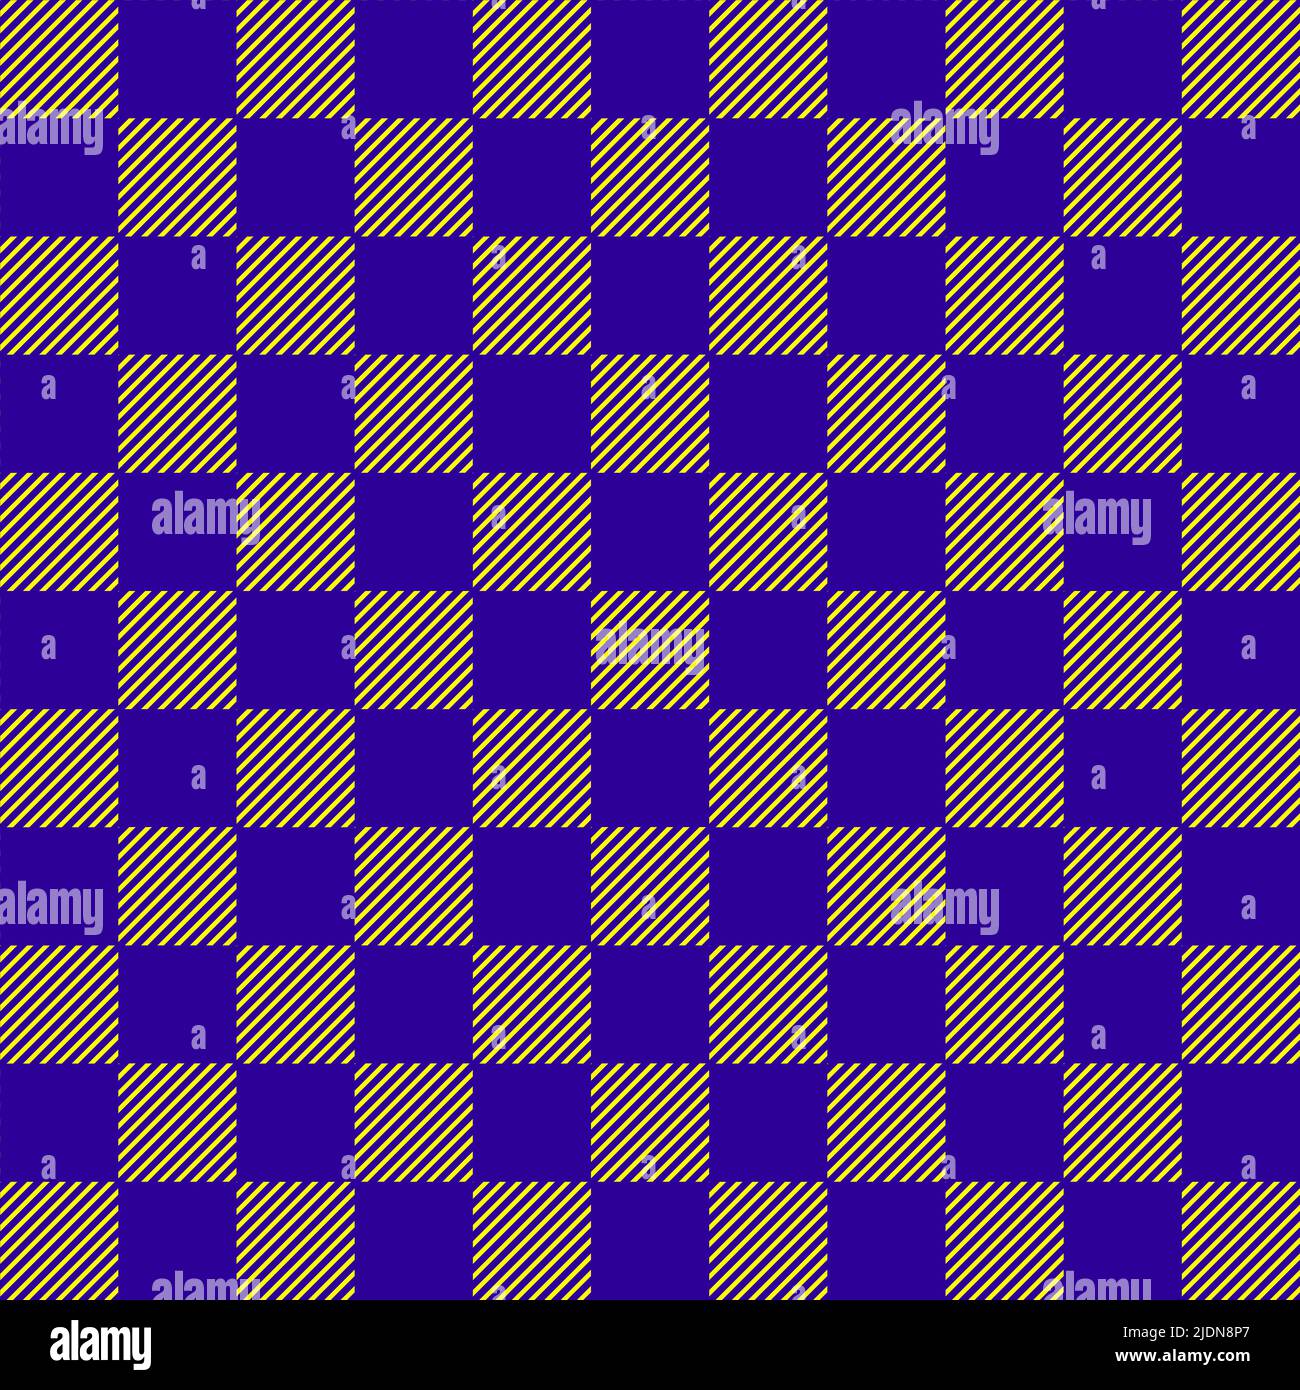 Seamless pattern fabric tartan plaid trendy checker print abstract background vector illustration Stock Vector